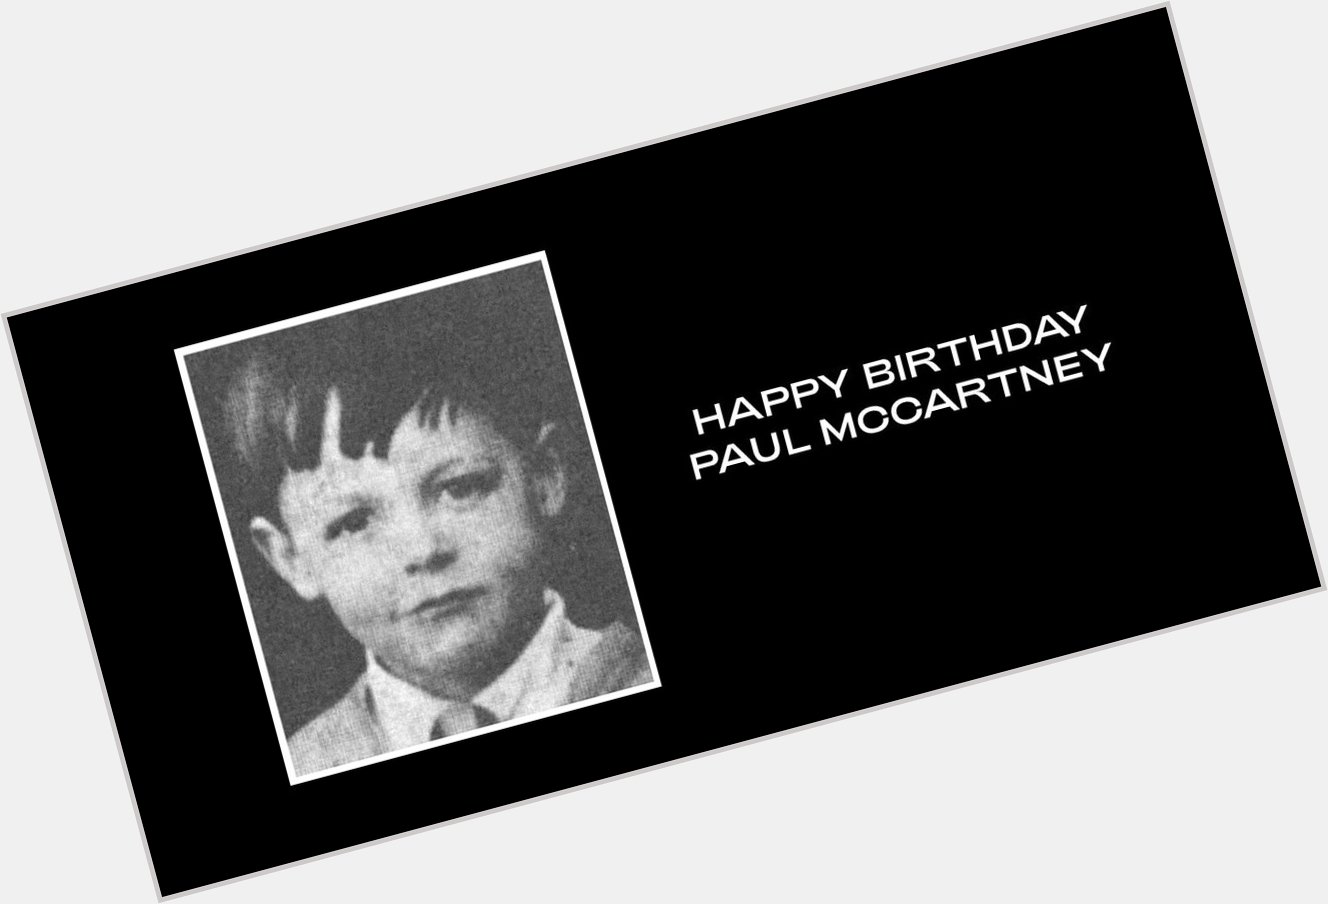  Happy Birthday Paul McCartney & Zoe Saldana  